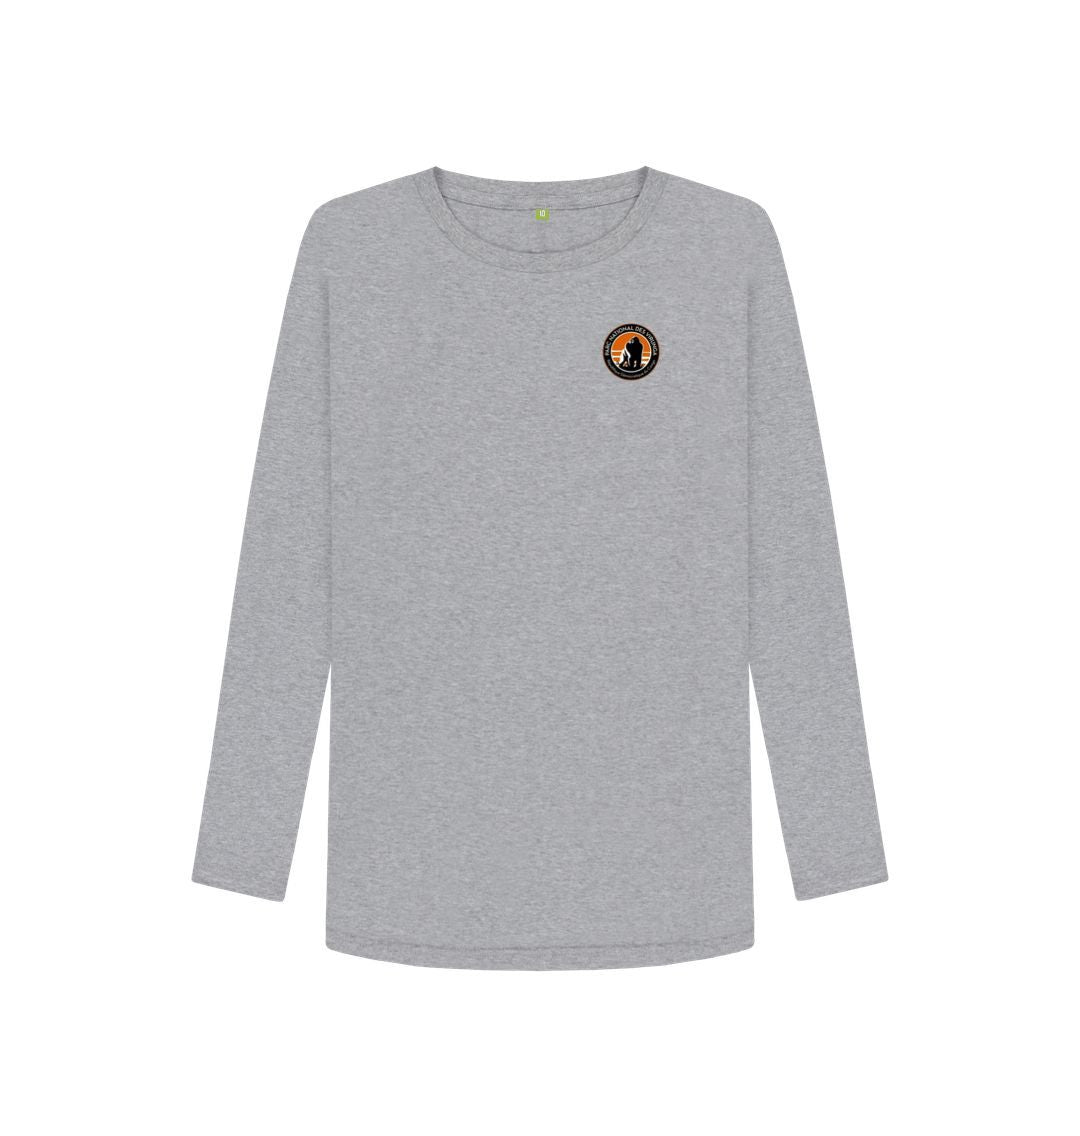 Athletic Grey Virunga Pocket Logo Women's Long Sleeve T-shirt